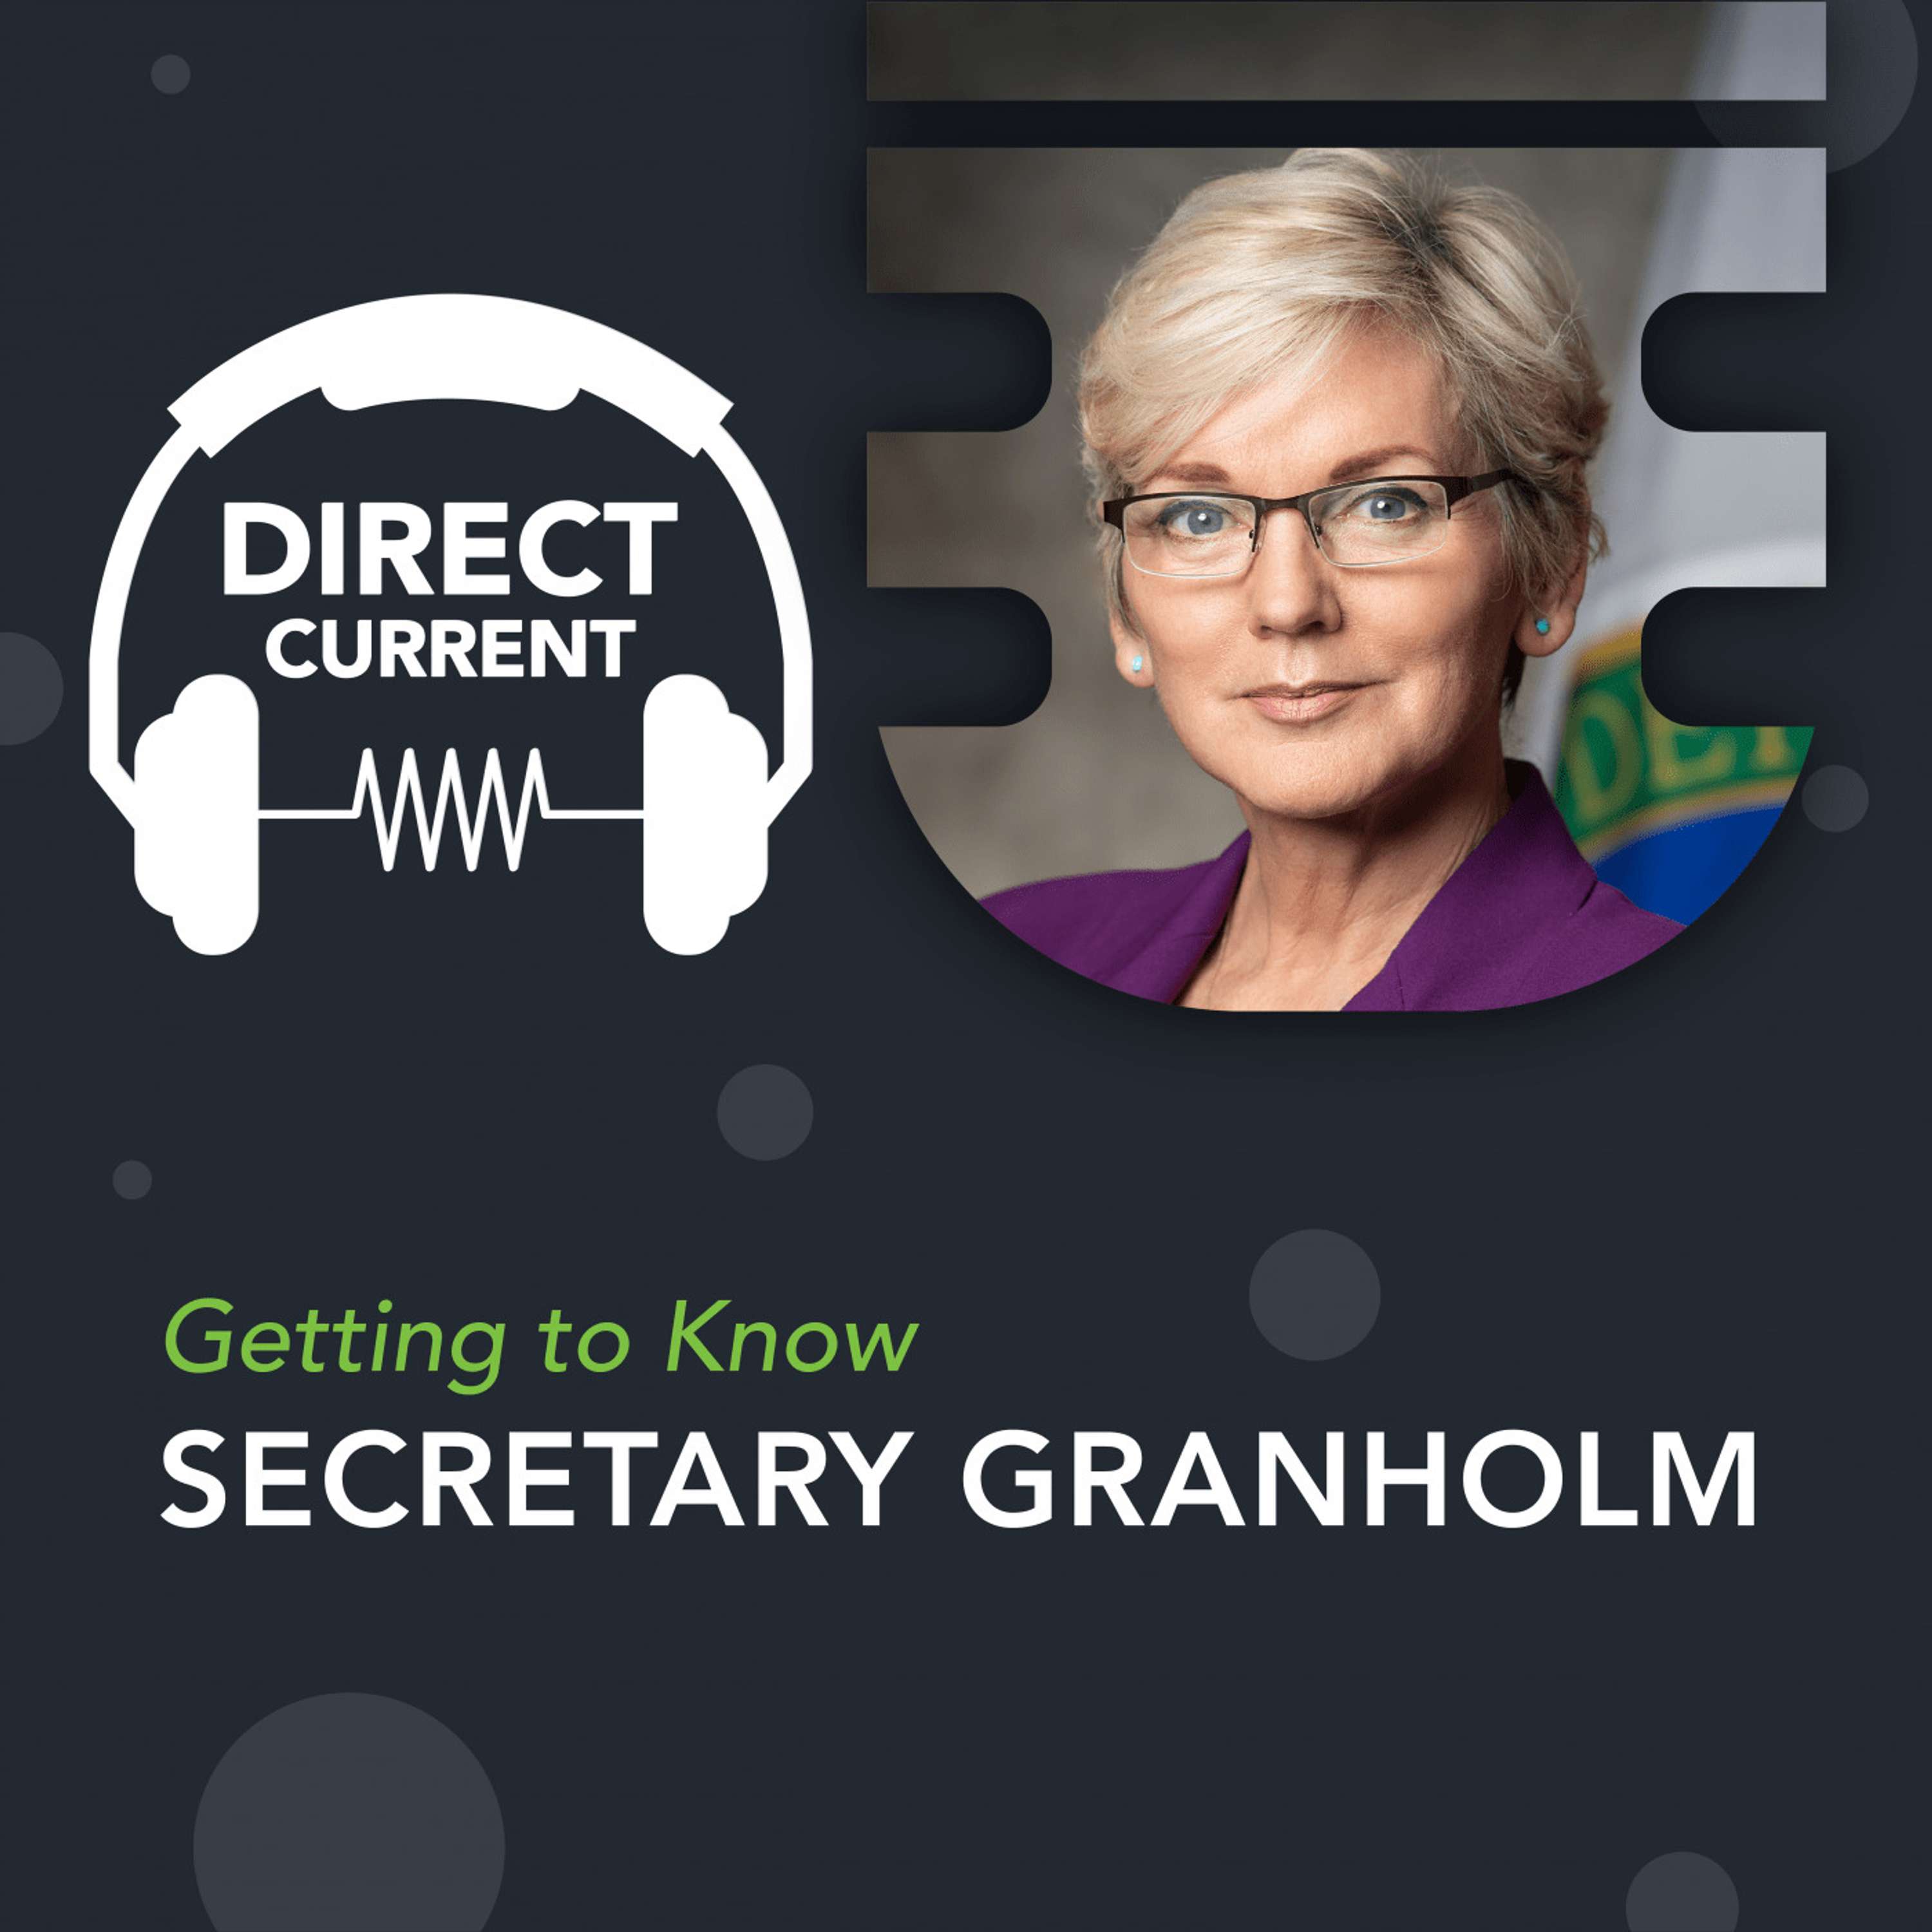 Getting to Know Secretary Granholm